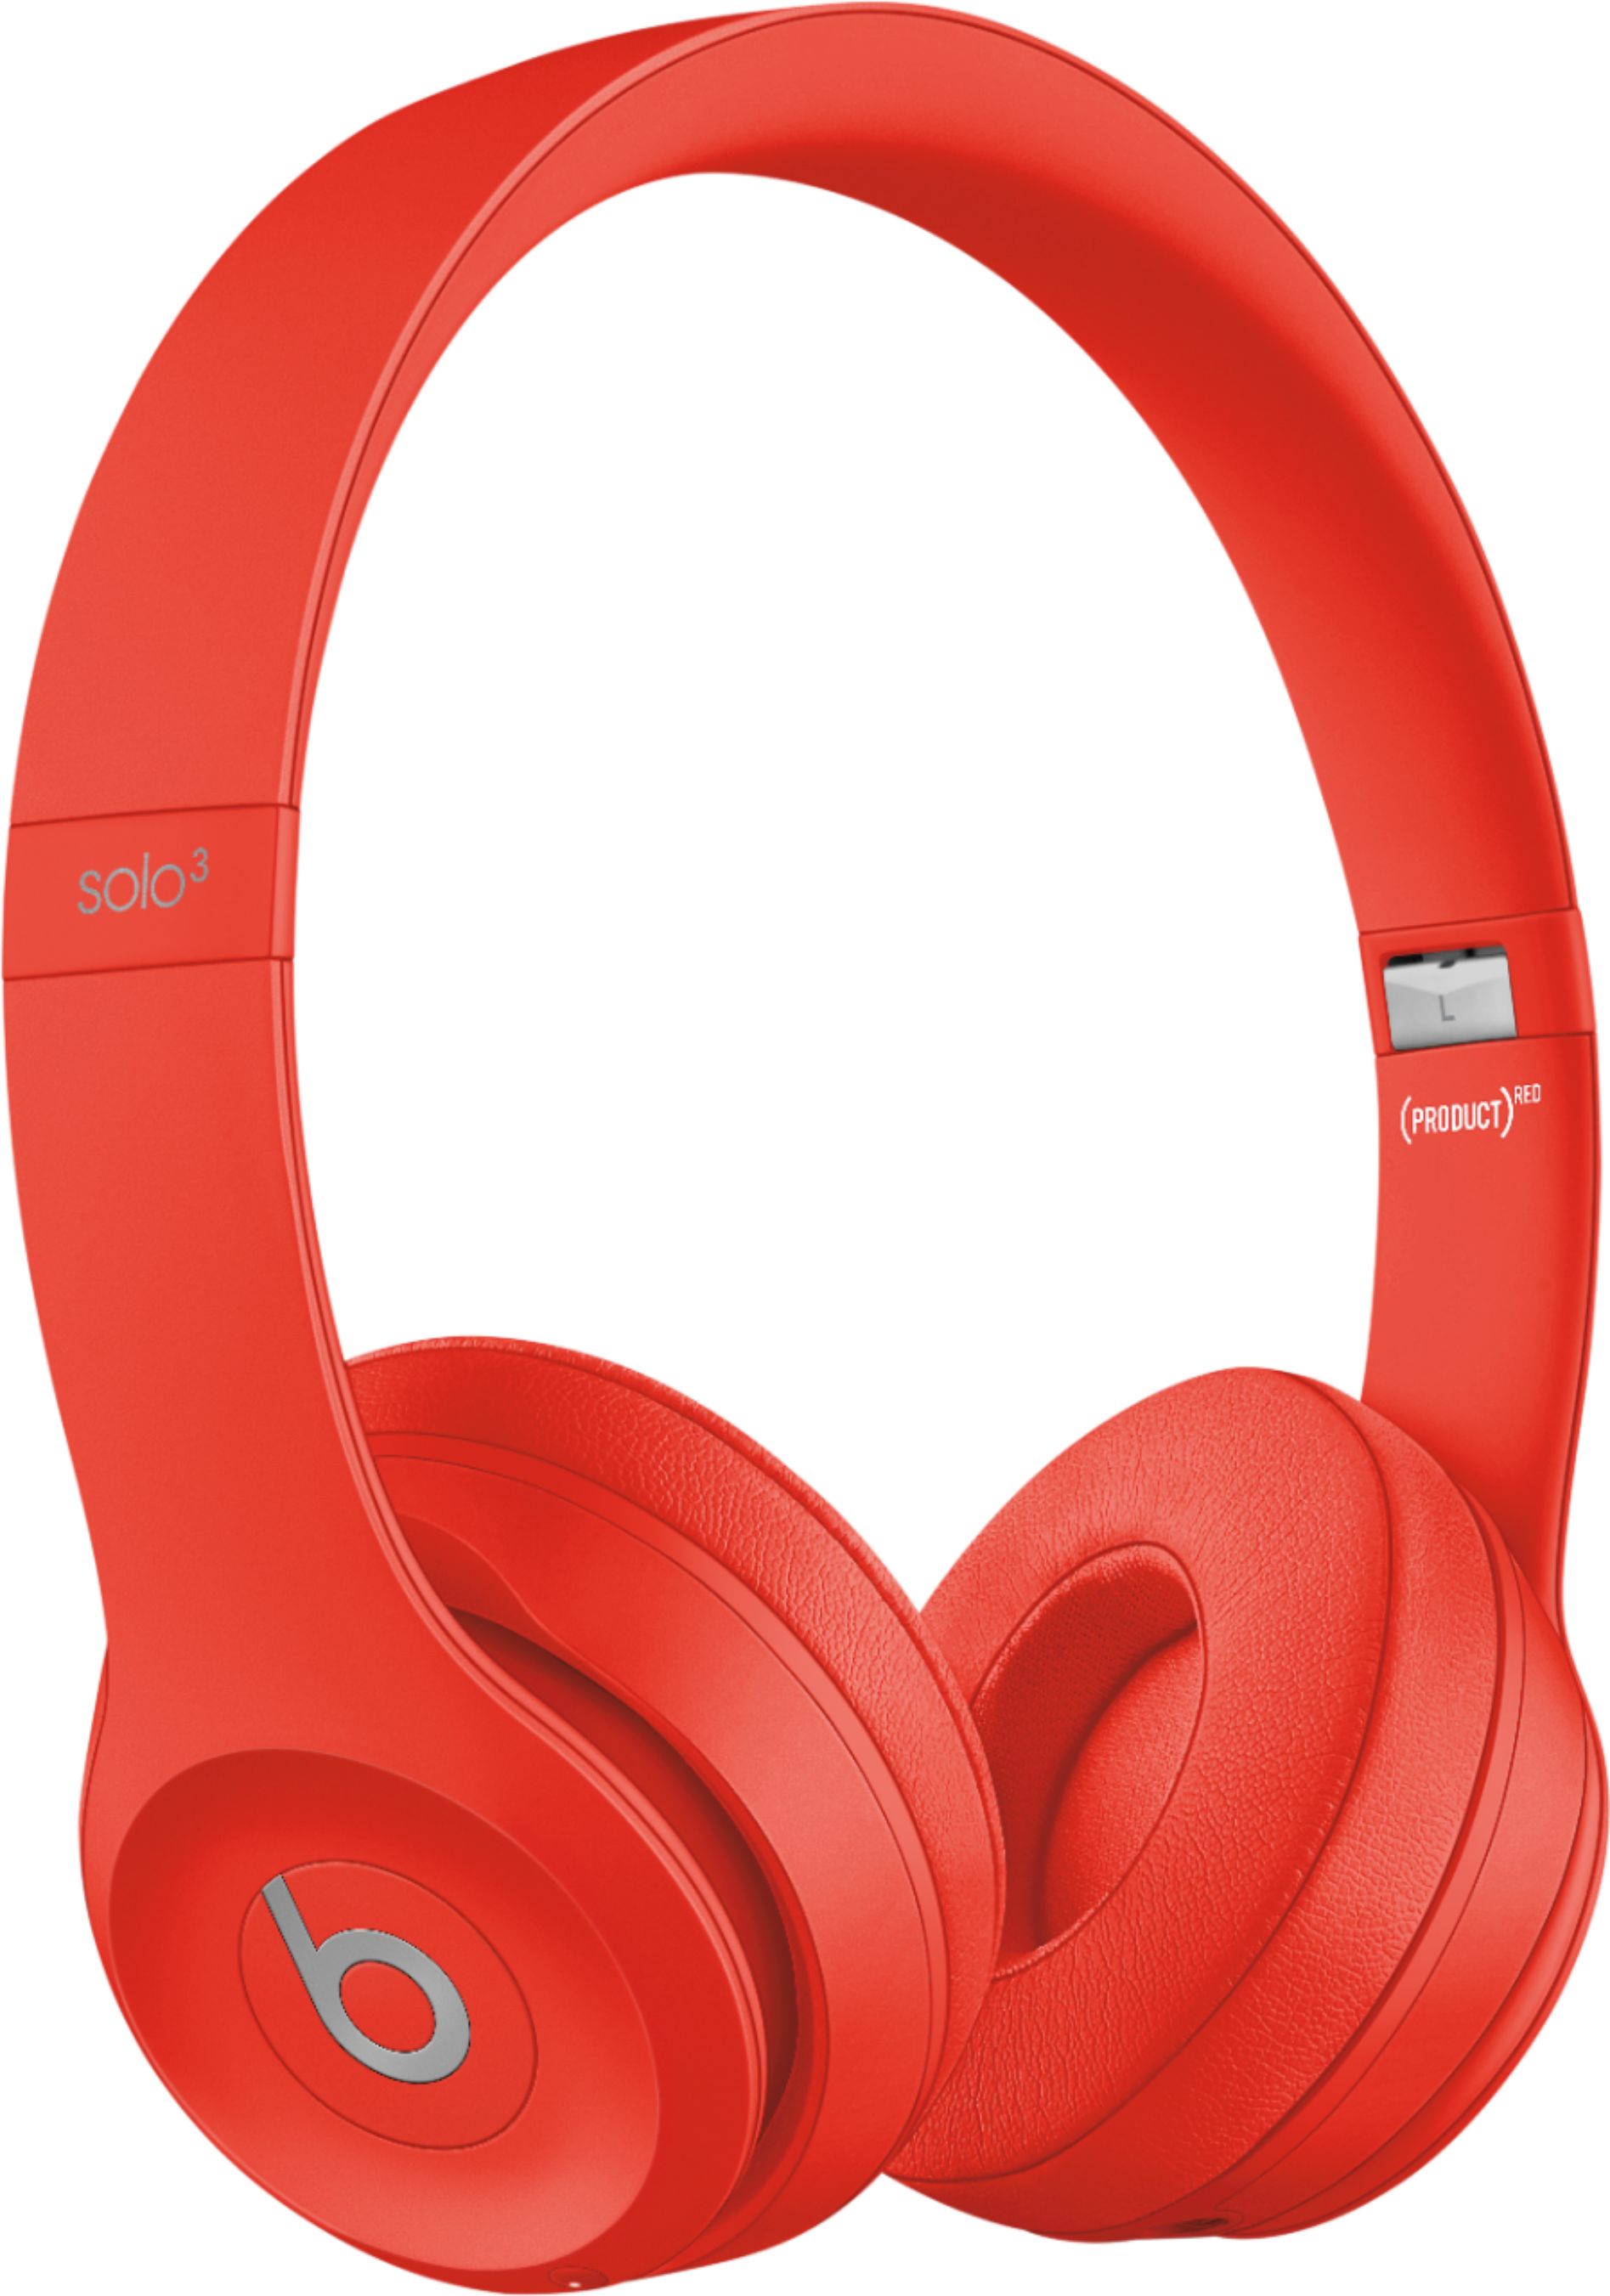 Ambassadør meditation spontan Beats by Dr. Dre Solo³ Wireless On-Ear Headphones (PRODUCT)RED Citrus Red  MX472LL/A - Best Buy